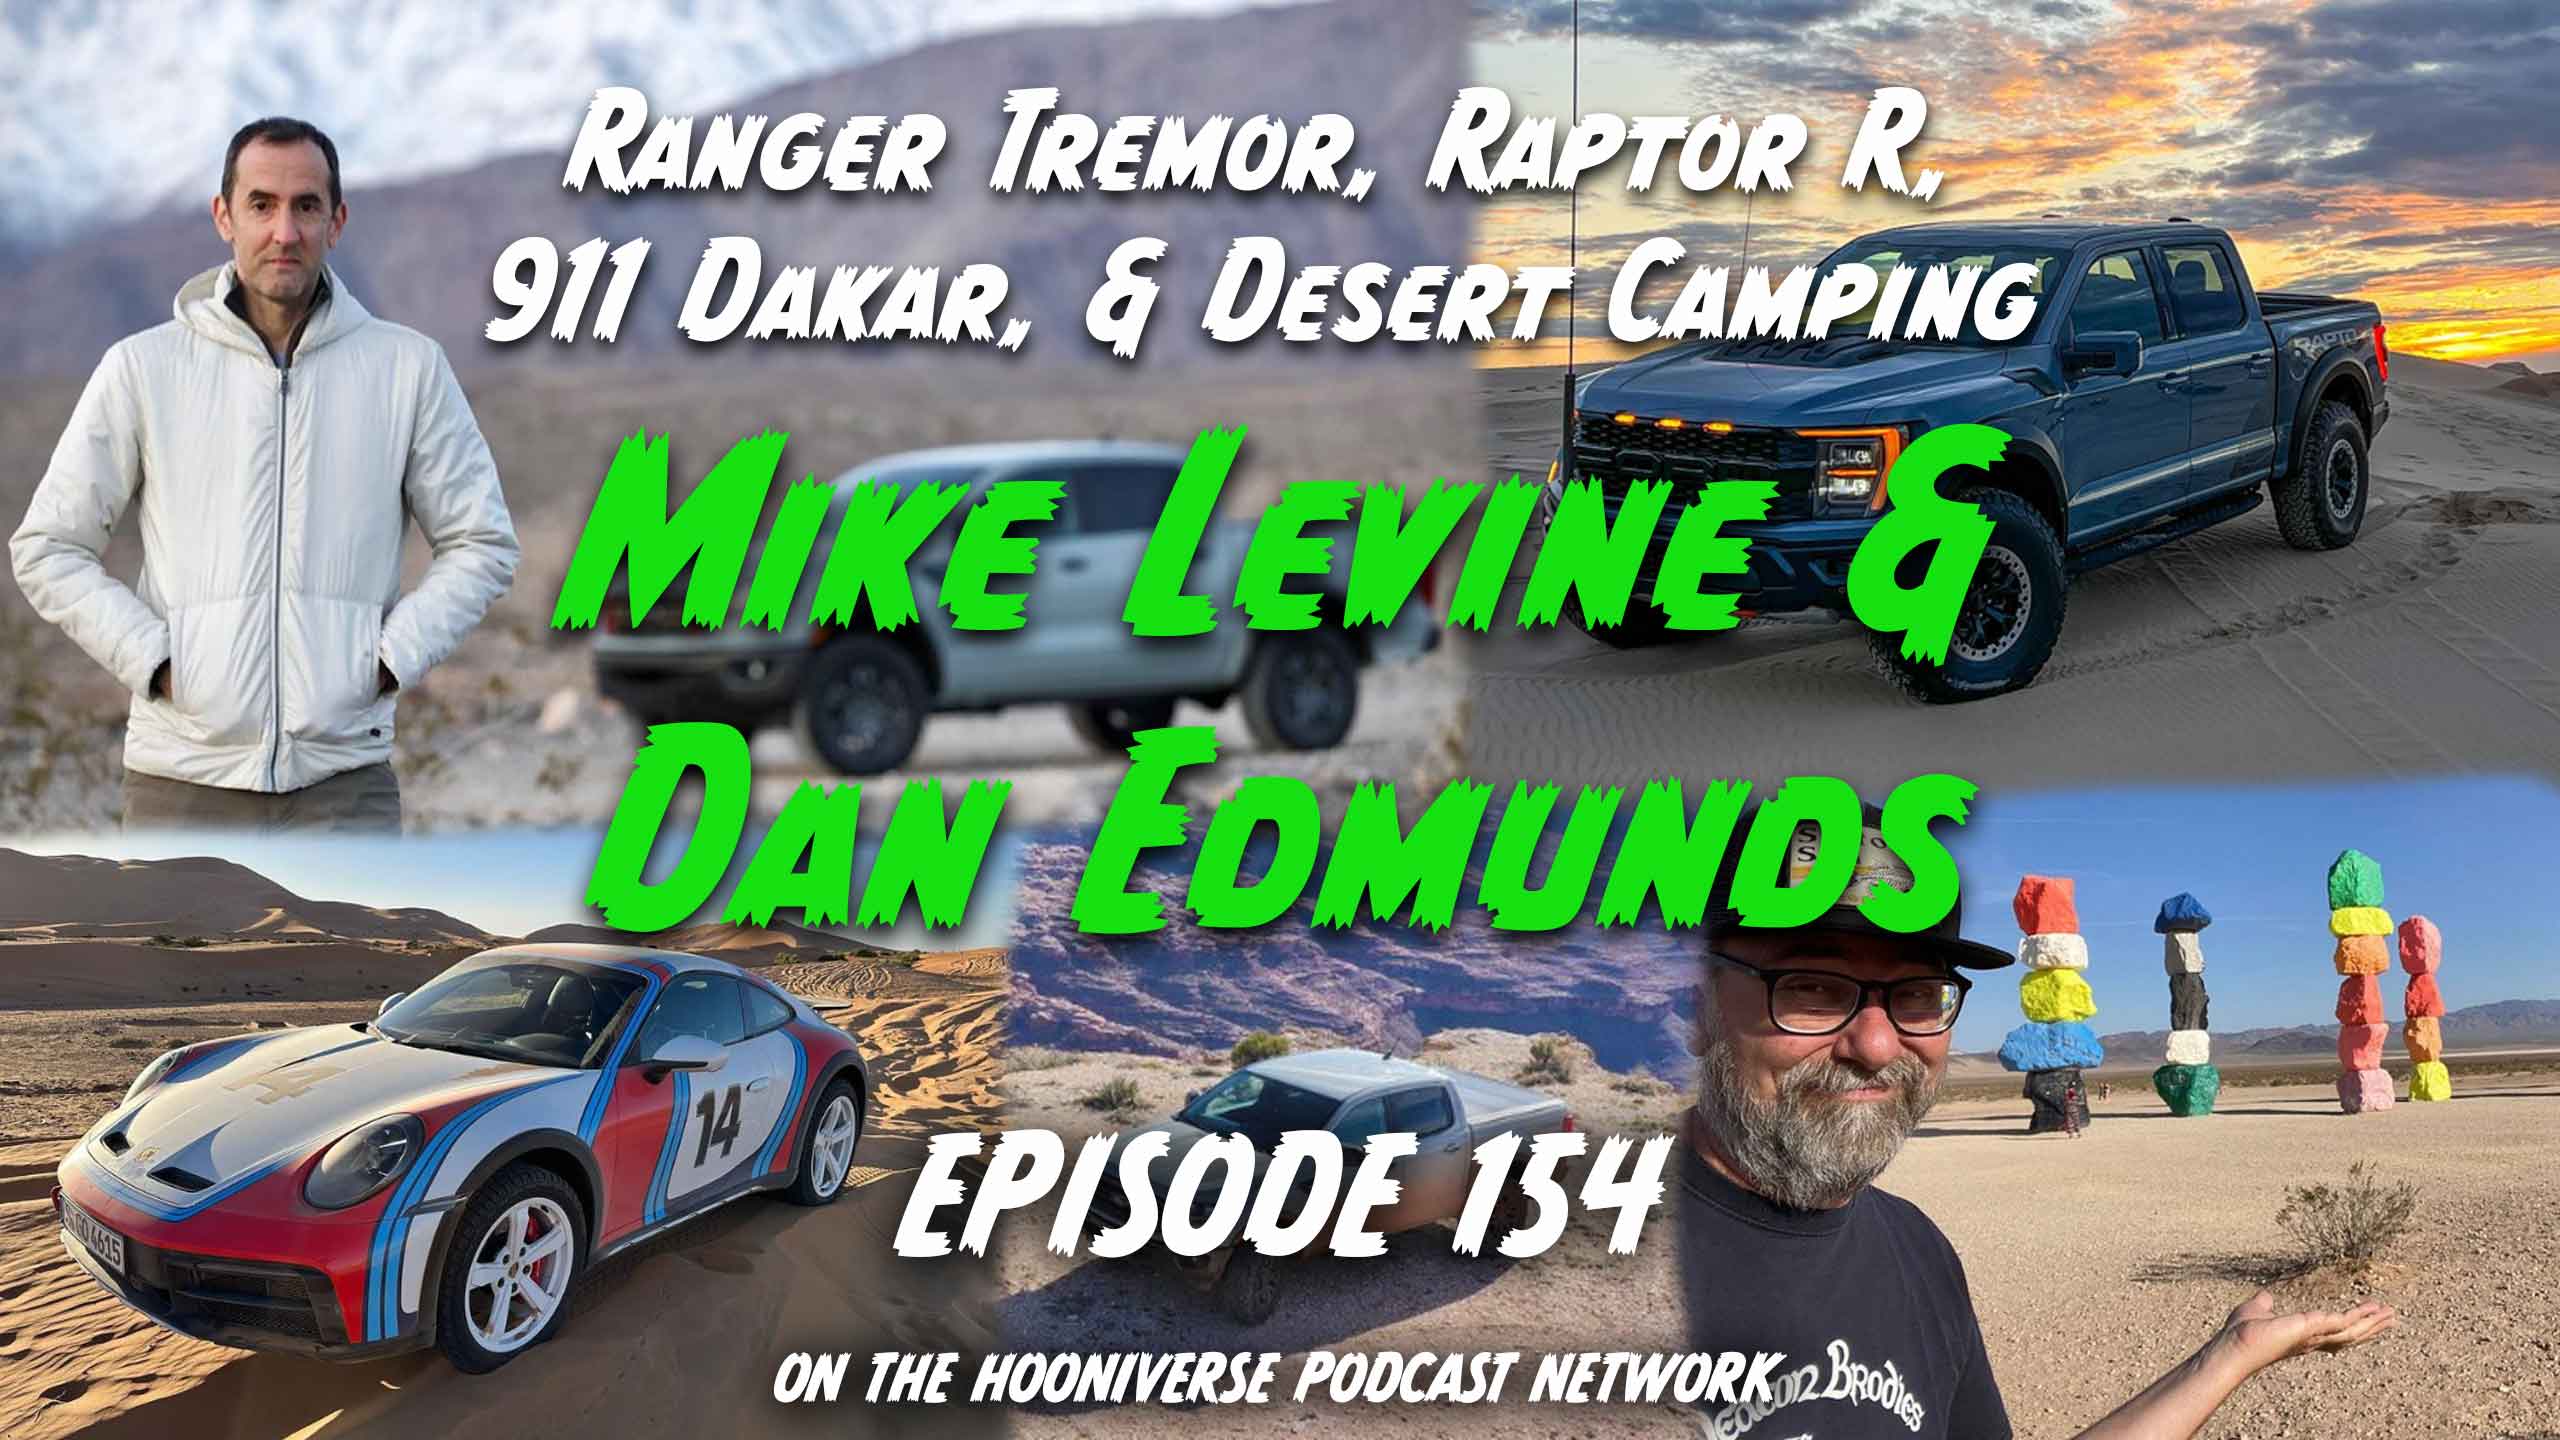 Mike-Levine-Dan-Edumunds-Off-The-Road-Again-Podcast-Episod-154